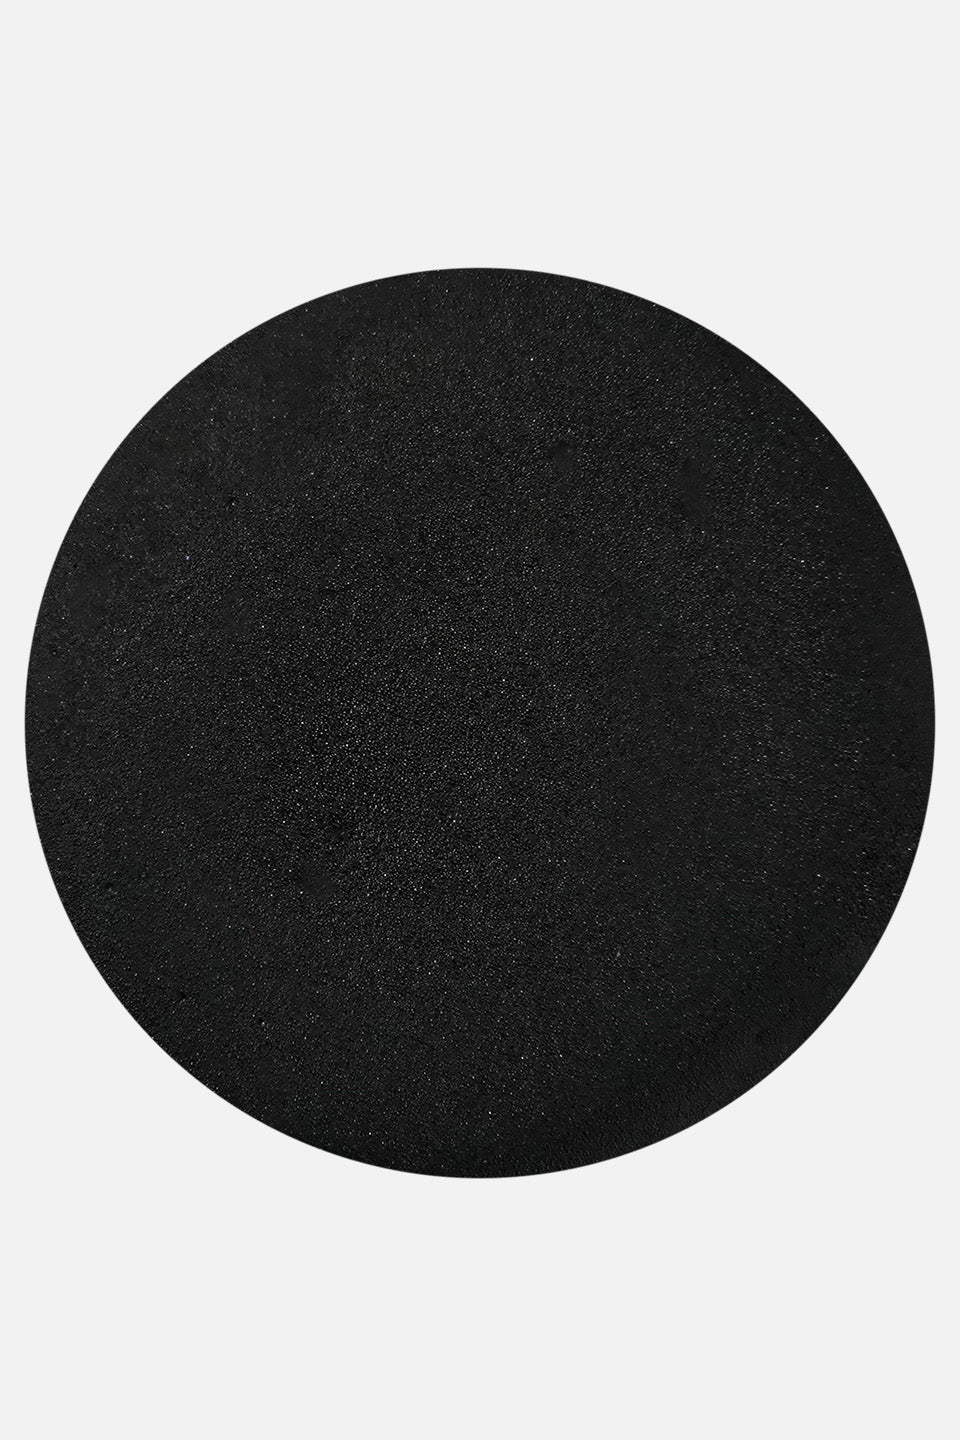 Polvo acrílico negro evelina 3 g